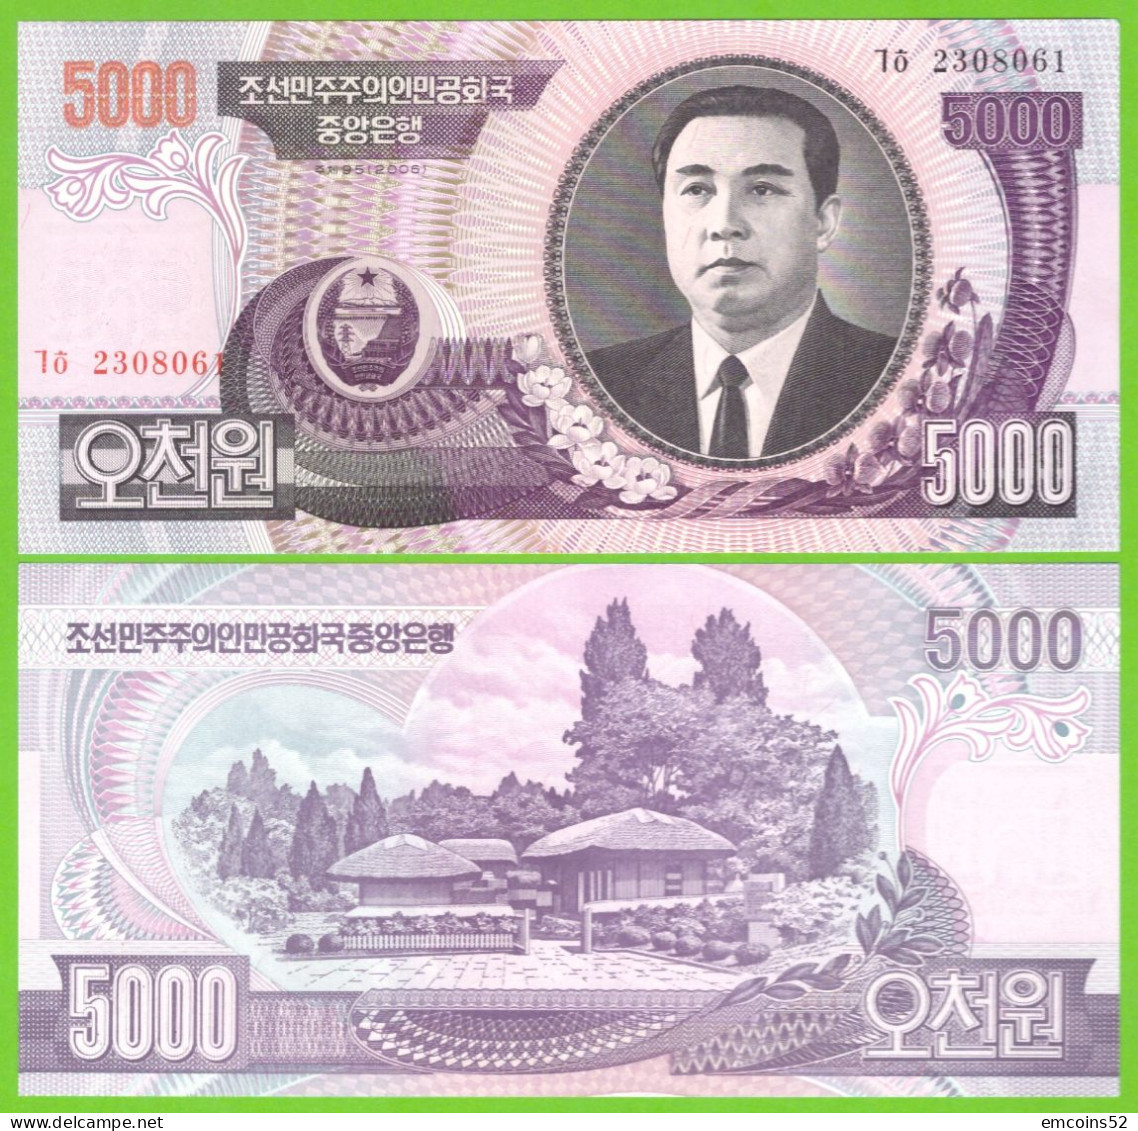 KOREA NORTH 5000 WON 2006 P-46c3 UNC - Korea, North